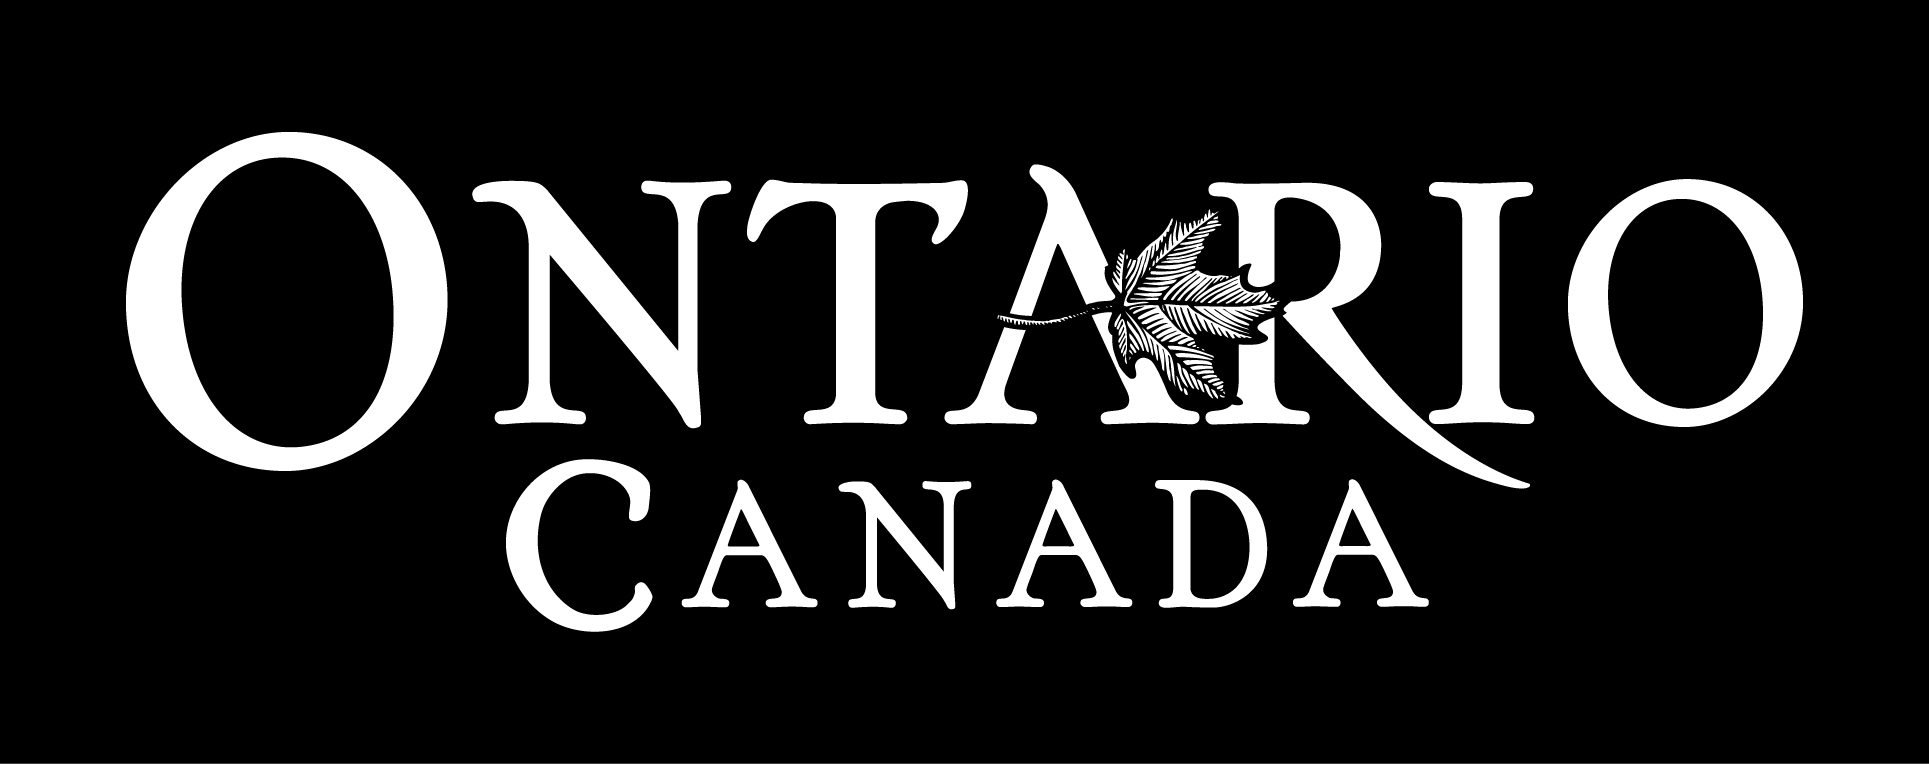 Ontario, Canada logo - reverse white